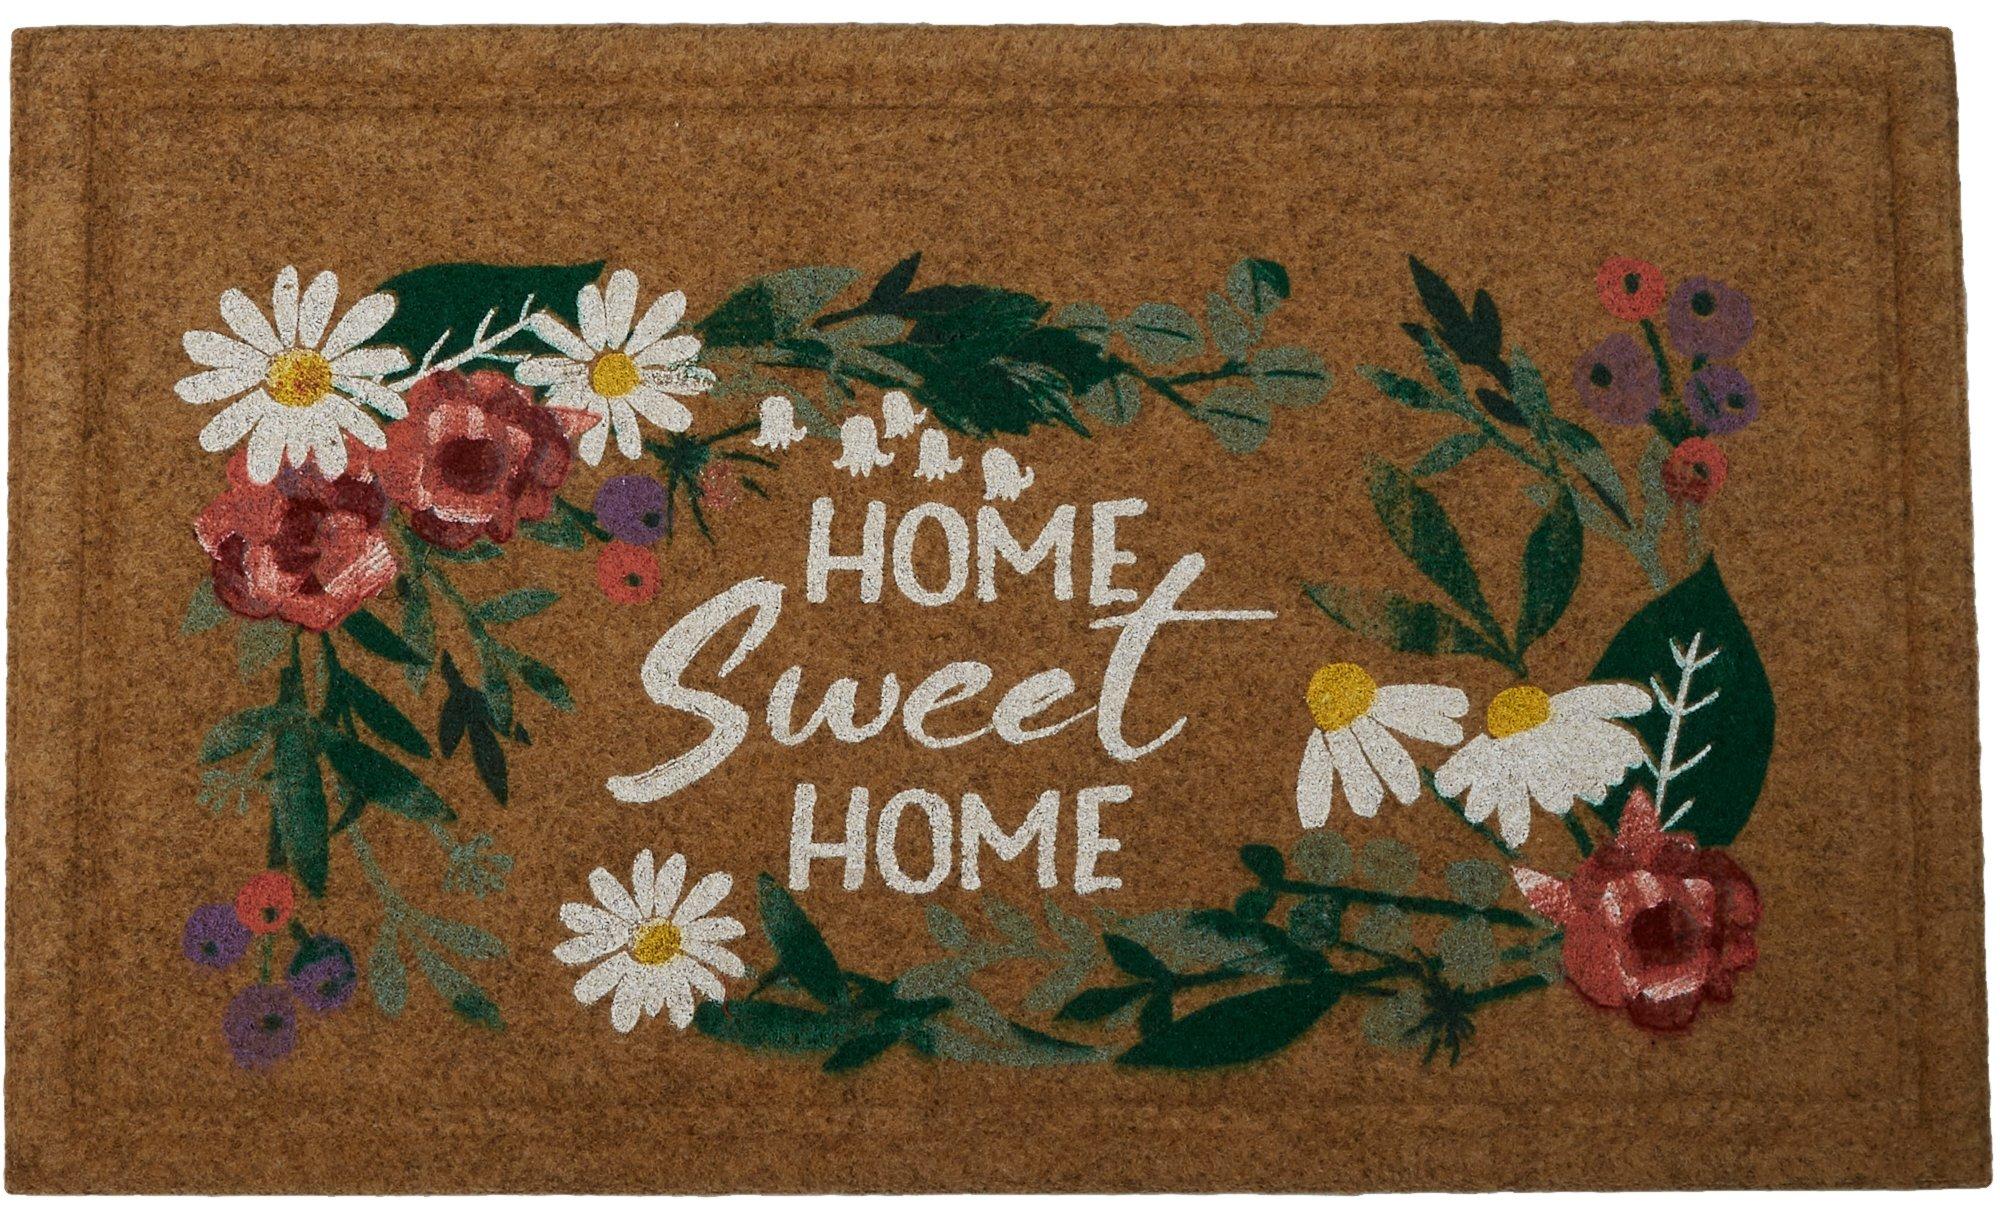 18x30 Home Sweet Home Faux Coir Doormat